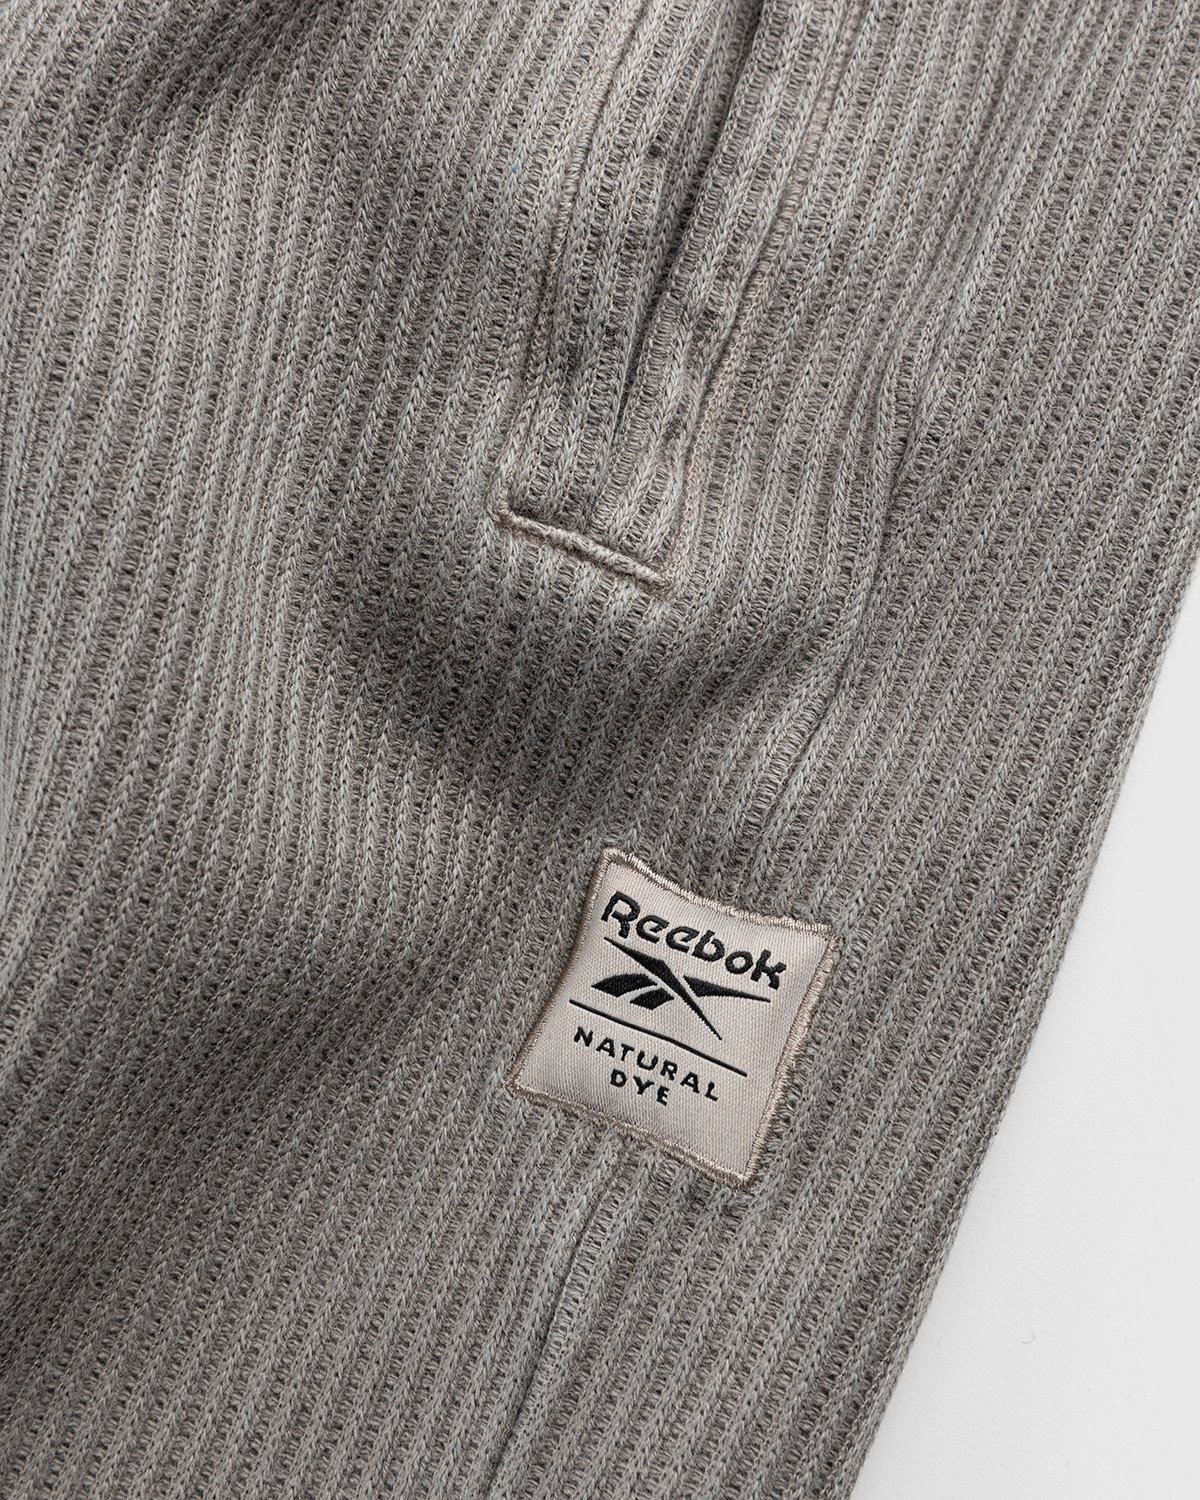 Reebok - Classics Natural Dye Waffle Shorts Grey - Clothing - Grey - Image 3